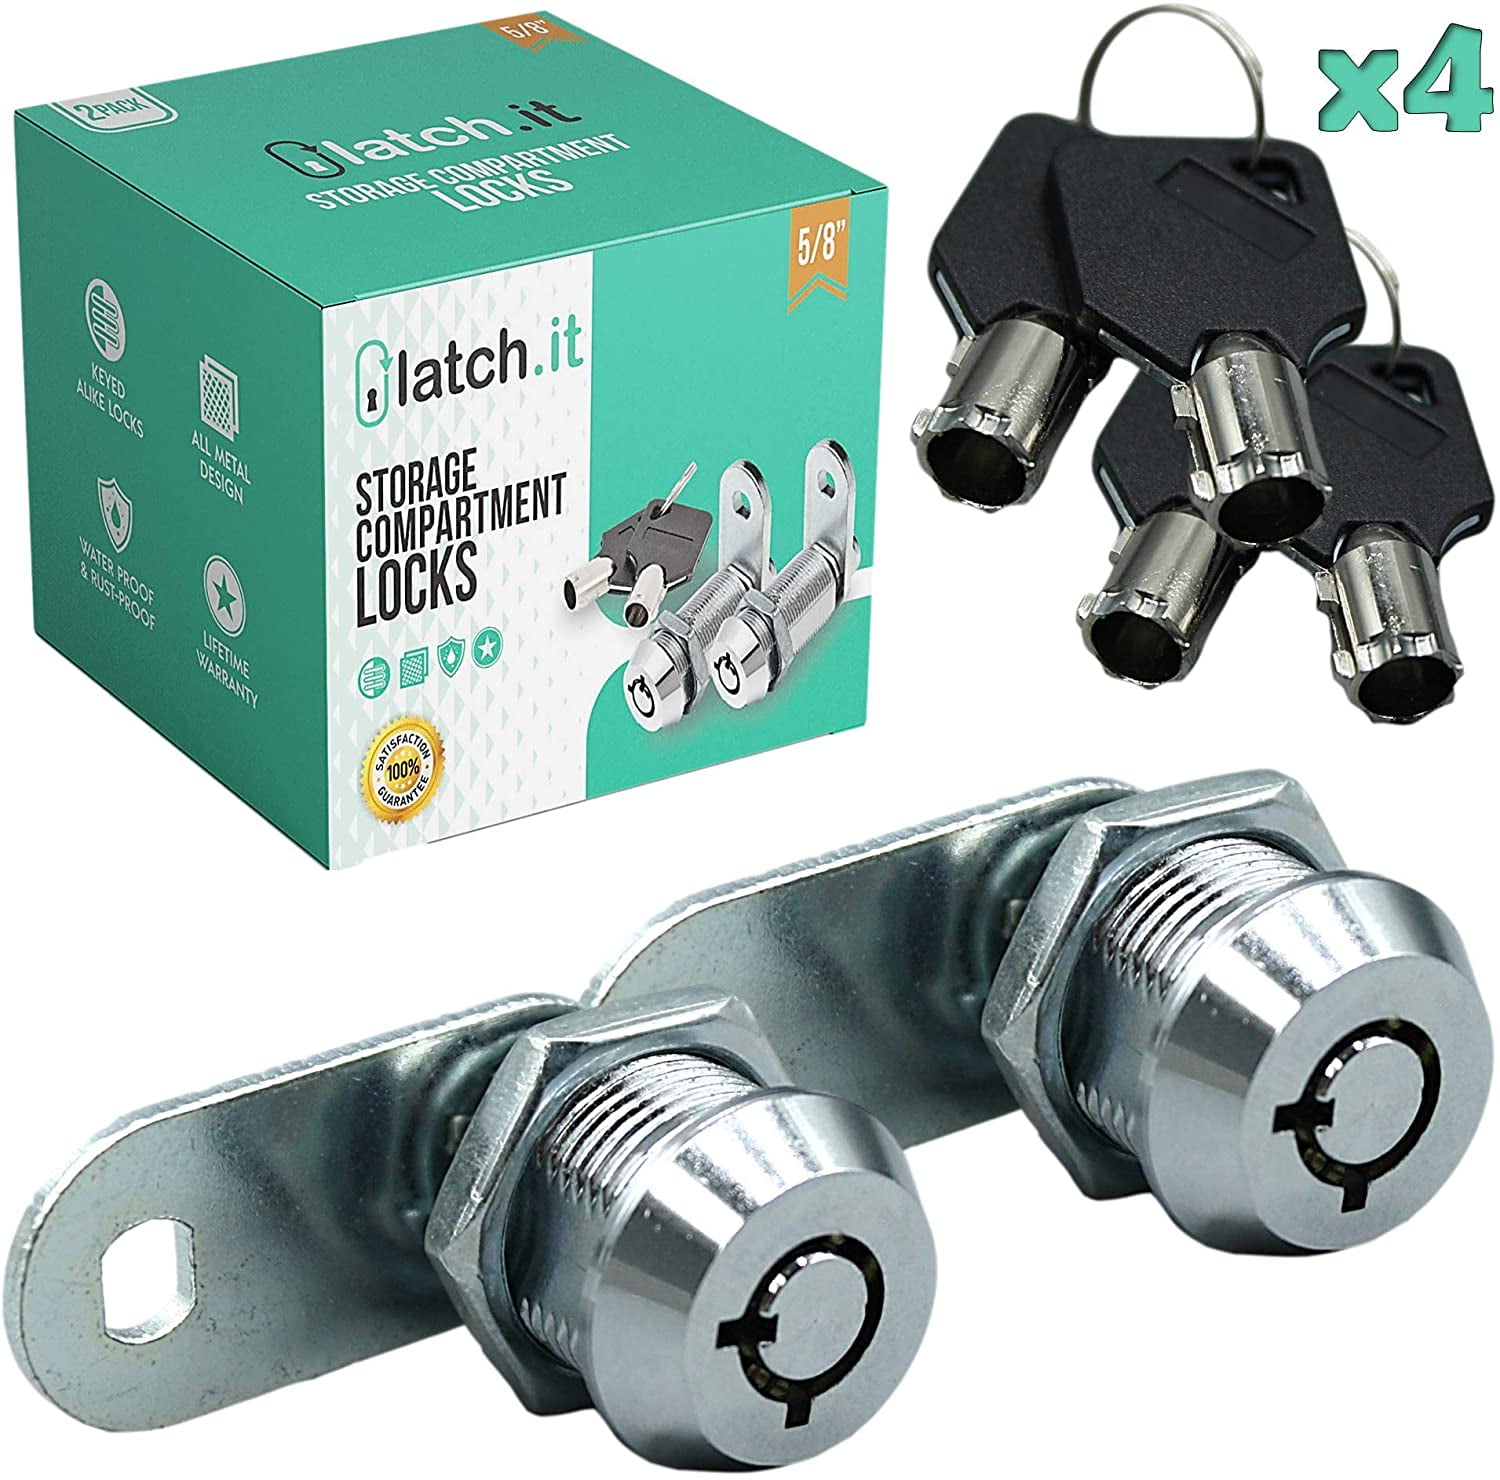 Punch punch bag Washroom Lock Small Size Caravan Motorhome Trailer Round Lock 2-way Open Easy Using Door Lock wrench toolbox organizer 